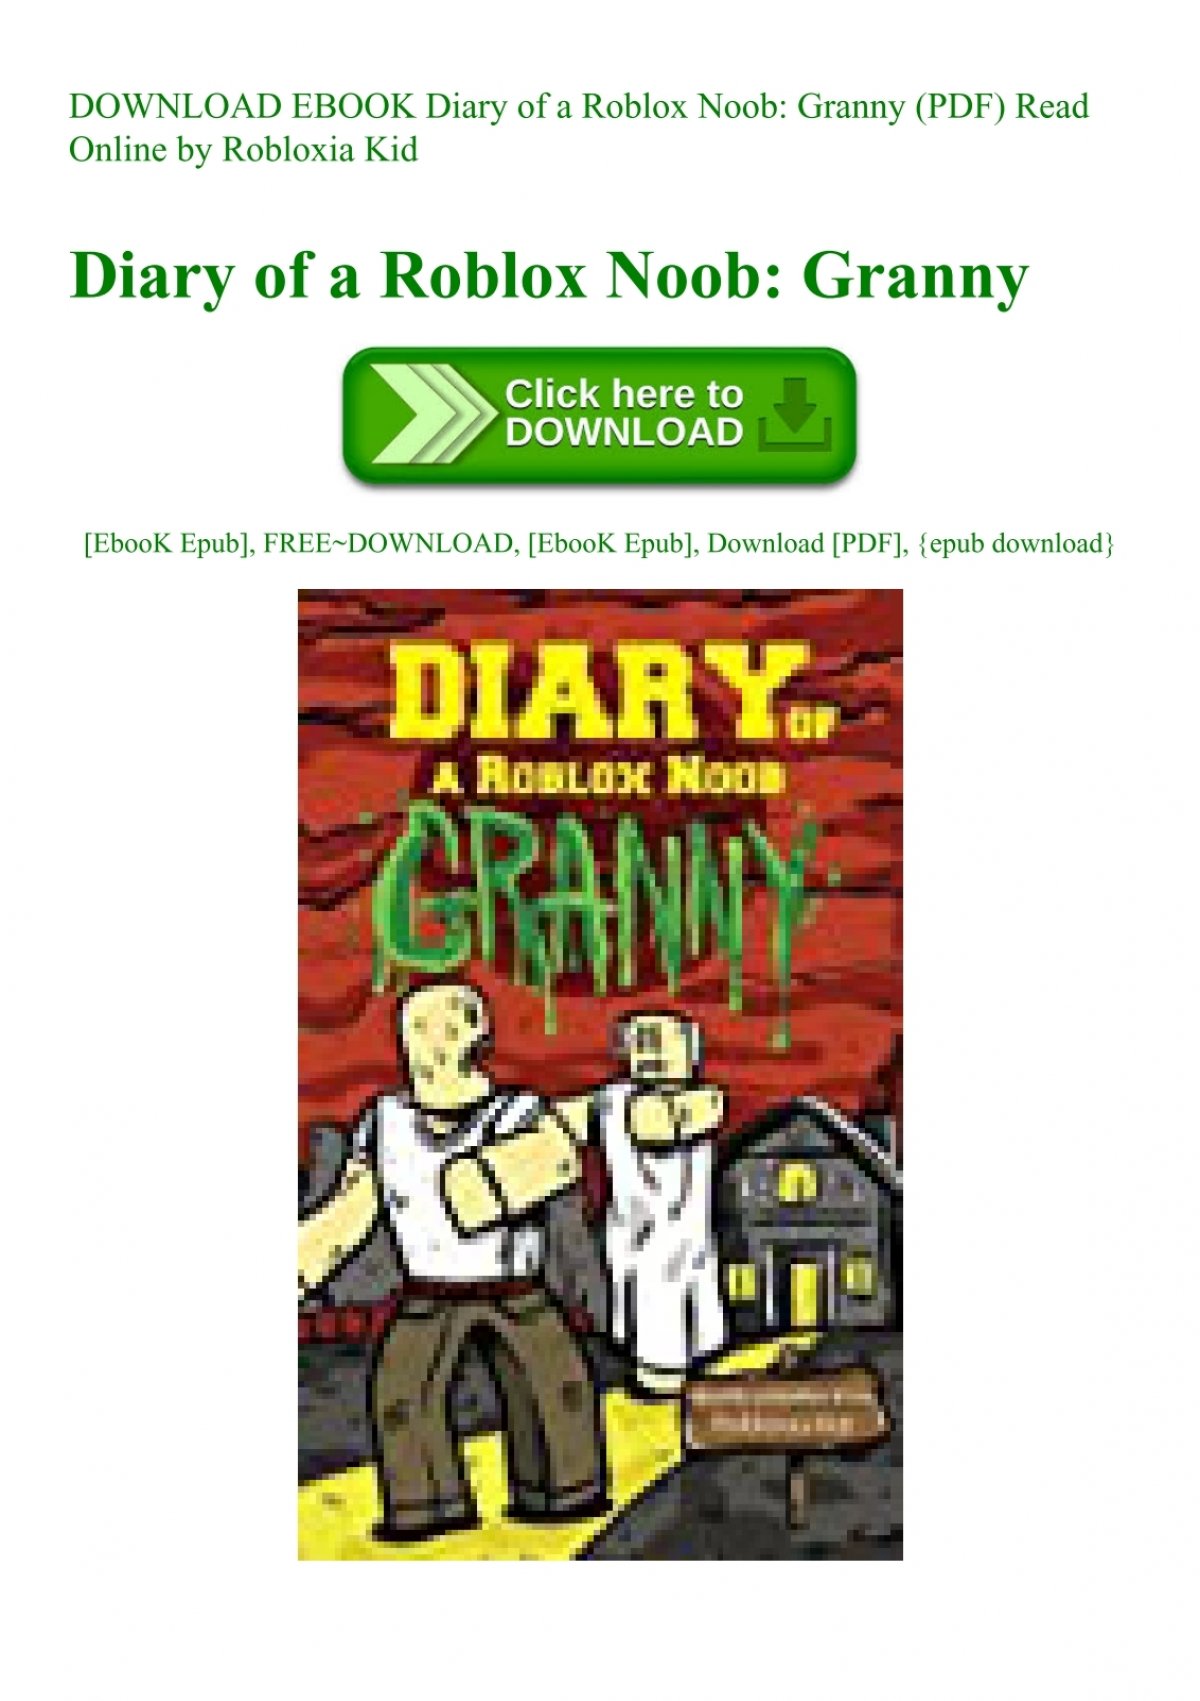 Download Ebook Diary Of A Roblox Noob Granny Pdf Read Online By Robloxia Kid - roblox noob home facebook